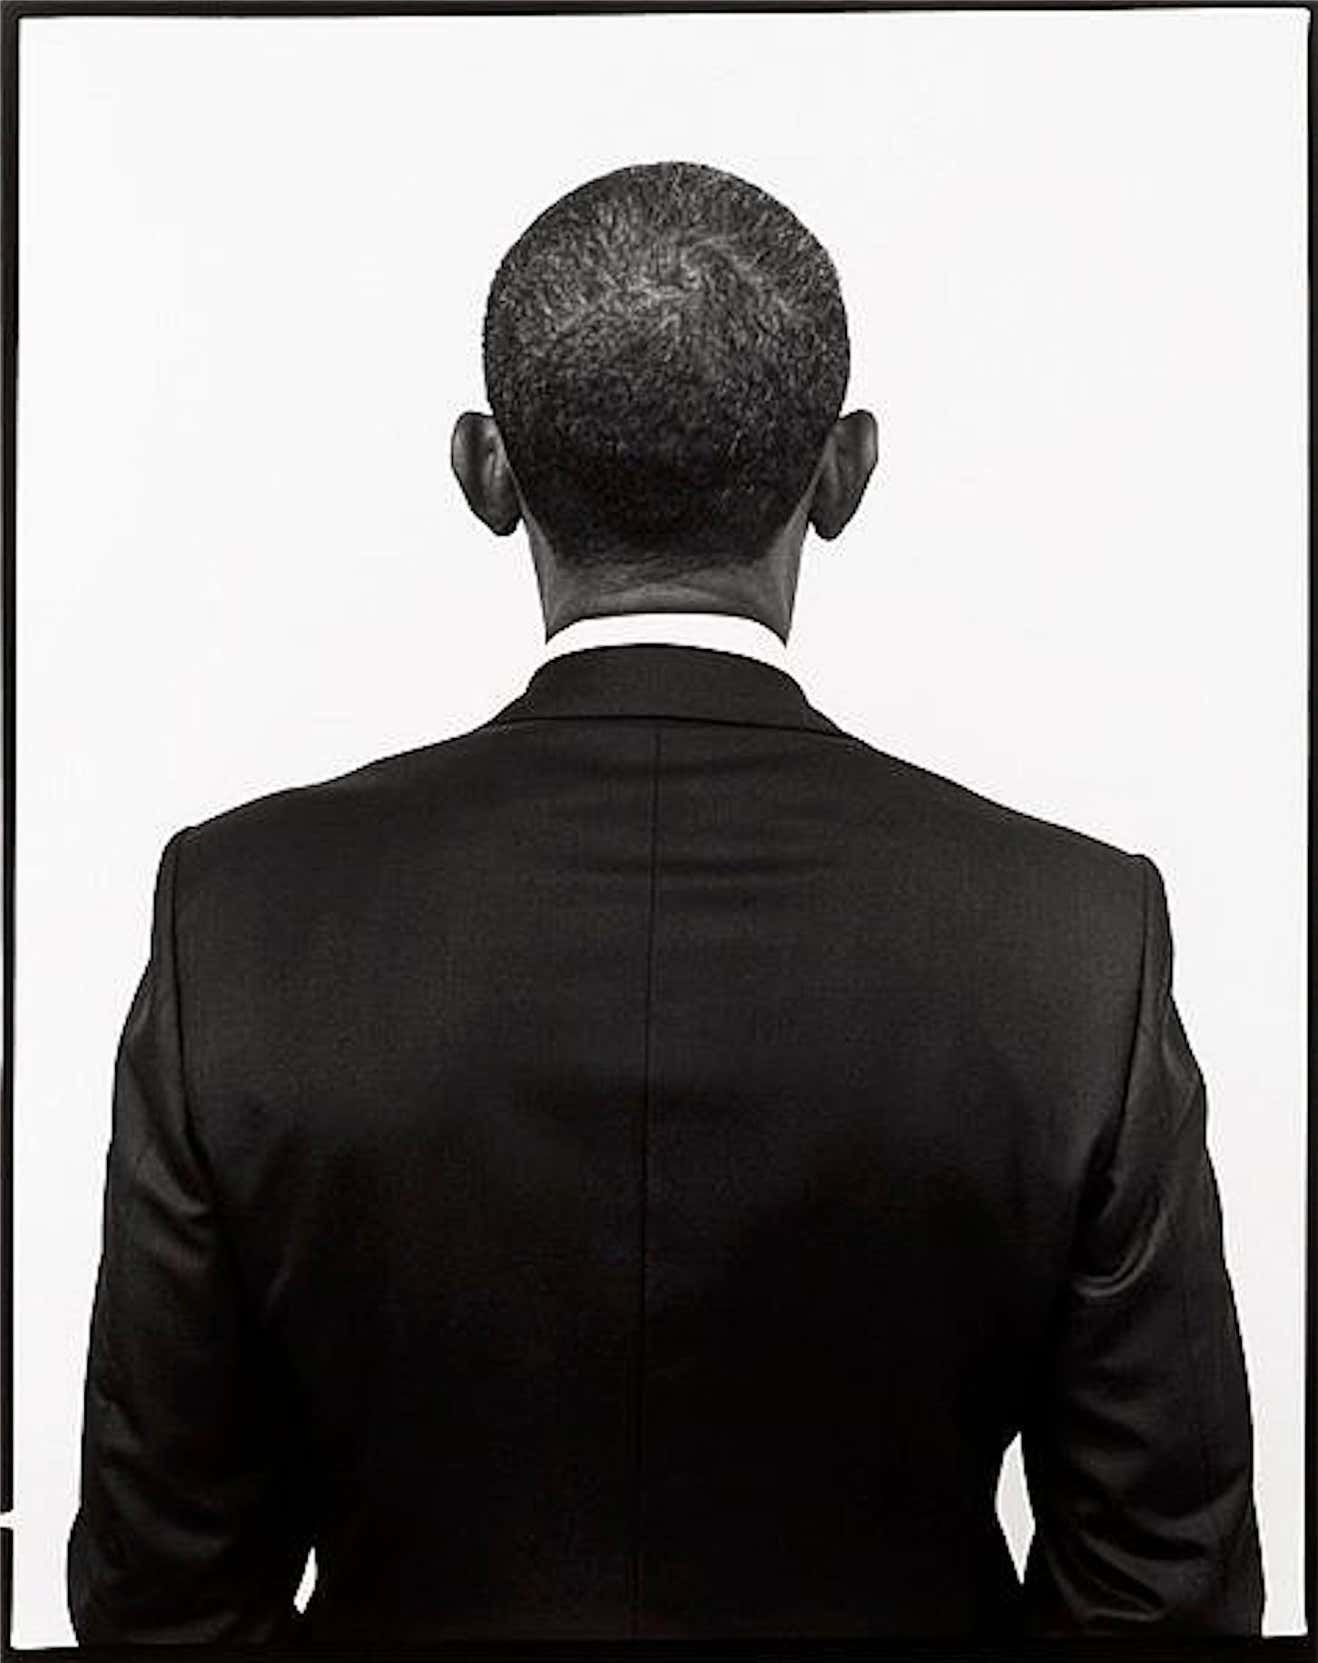 President Barack Obama by Mark Seliger, Back portrait of the president in a black suit